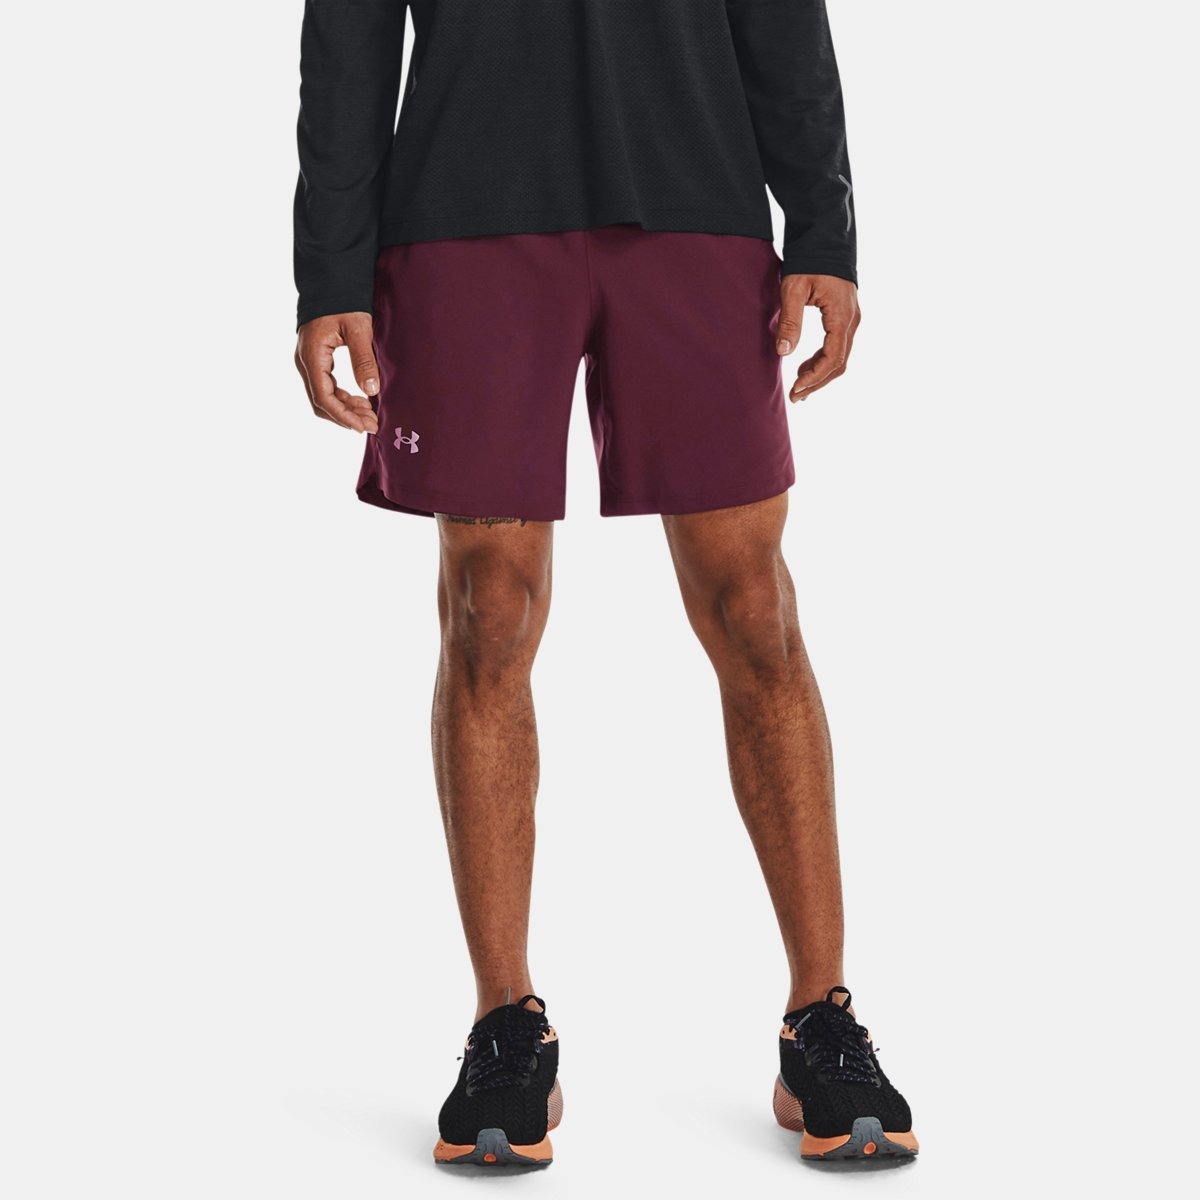 Men's Shorts in Burgundy by Under Armour GOOFASH